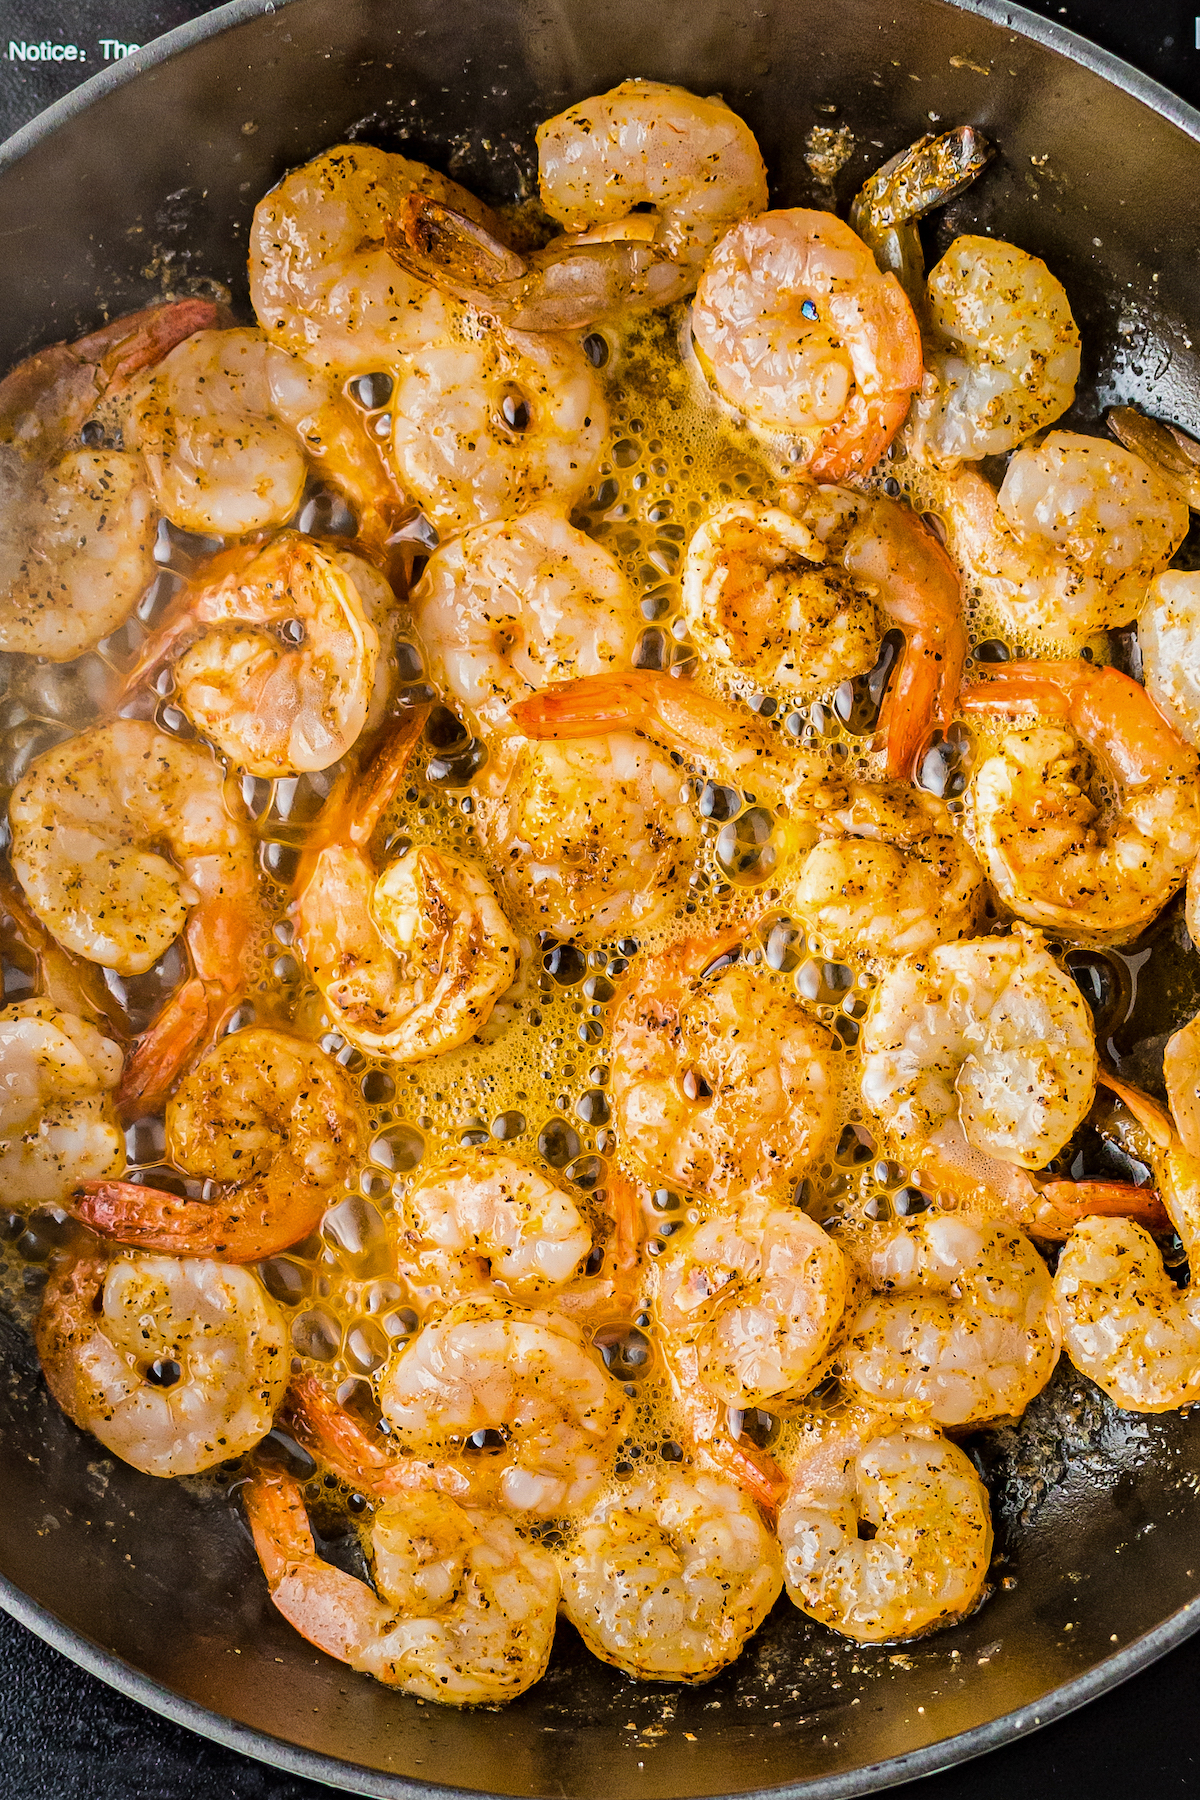 Seasoned shrimp cooking in a skillet.